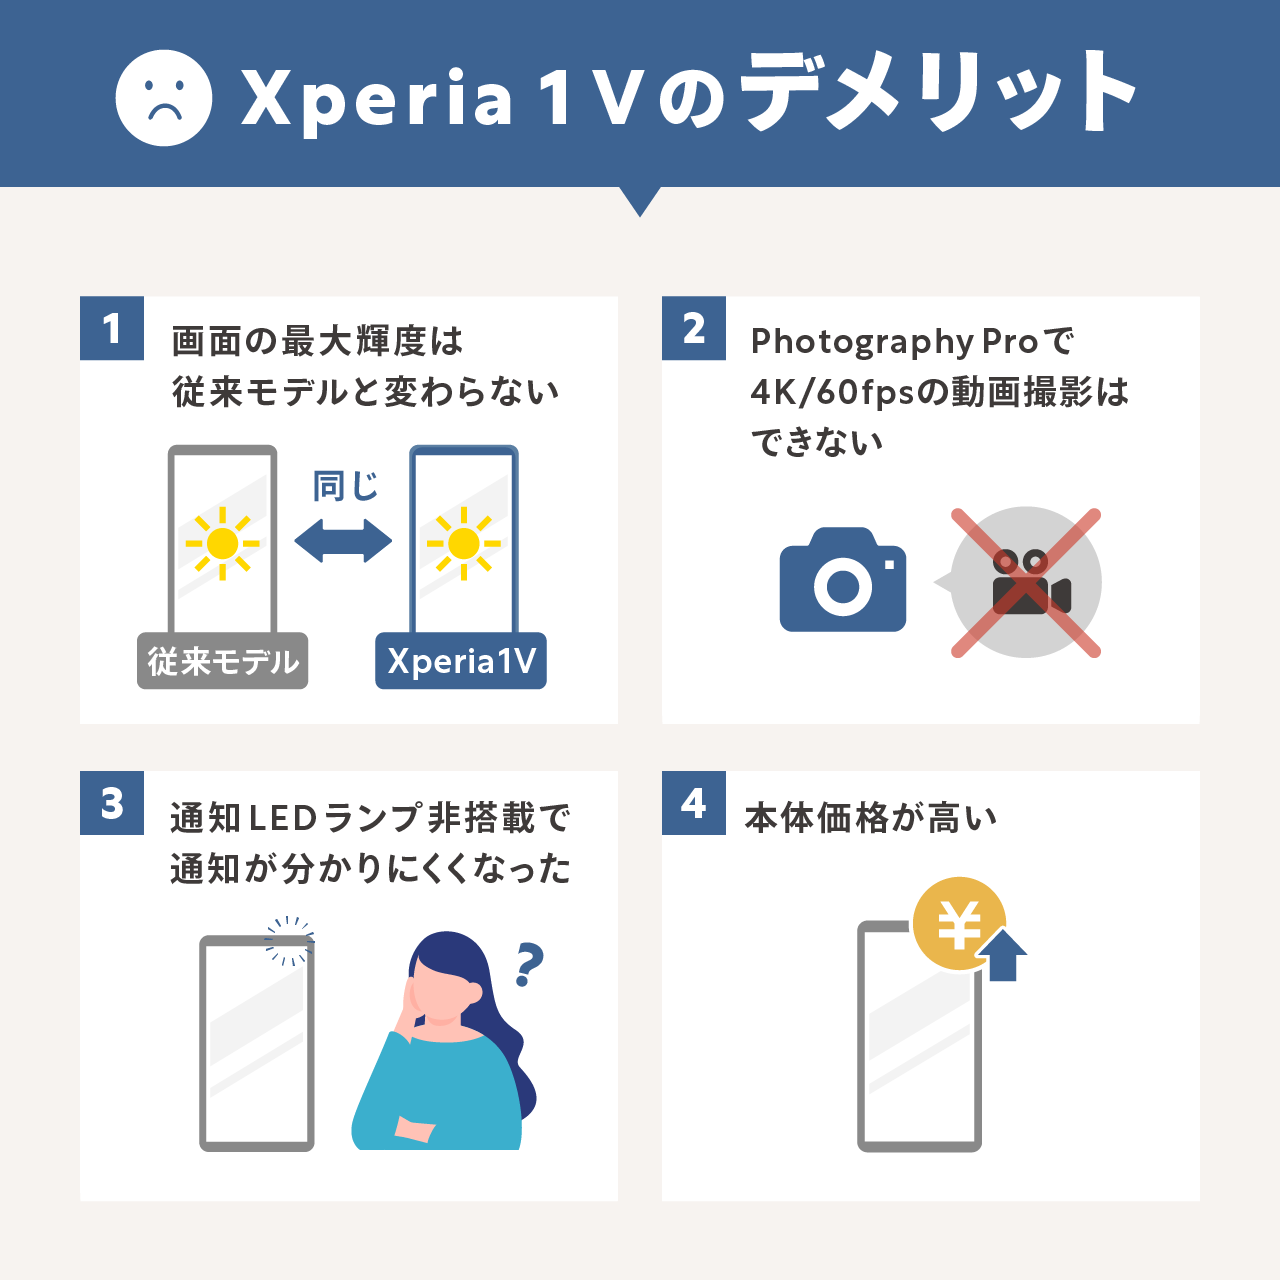 Xperia 1 Vのデメリット